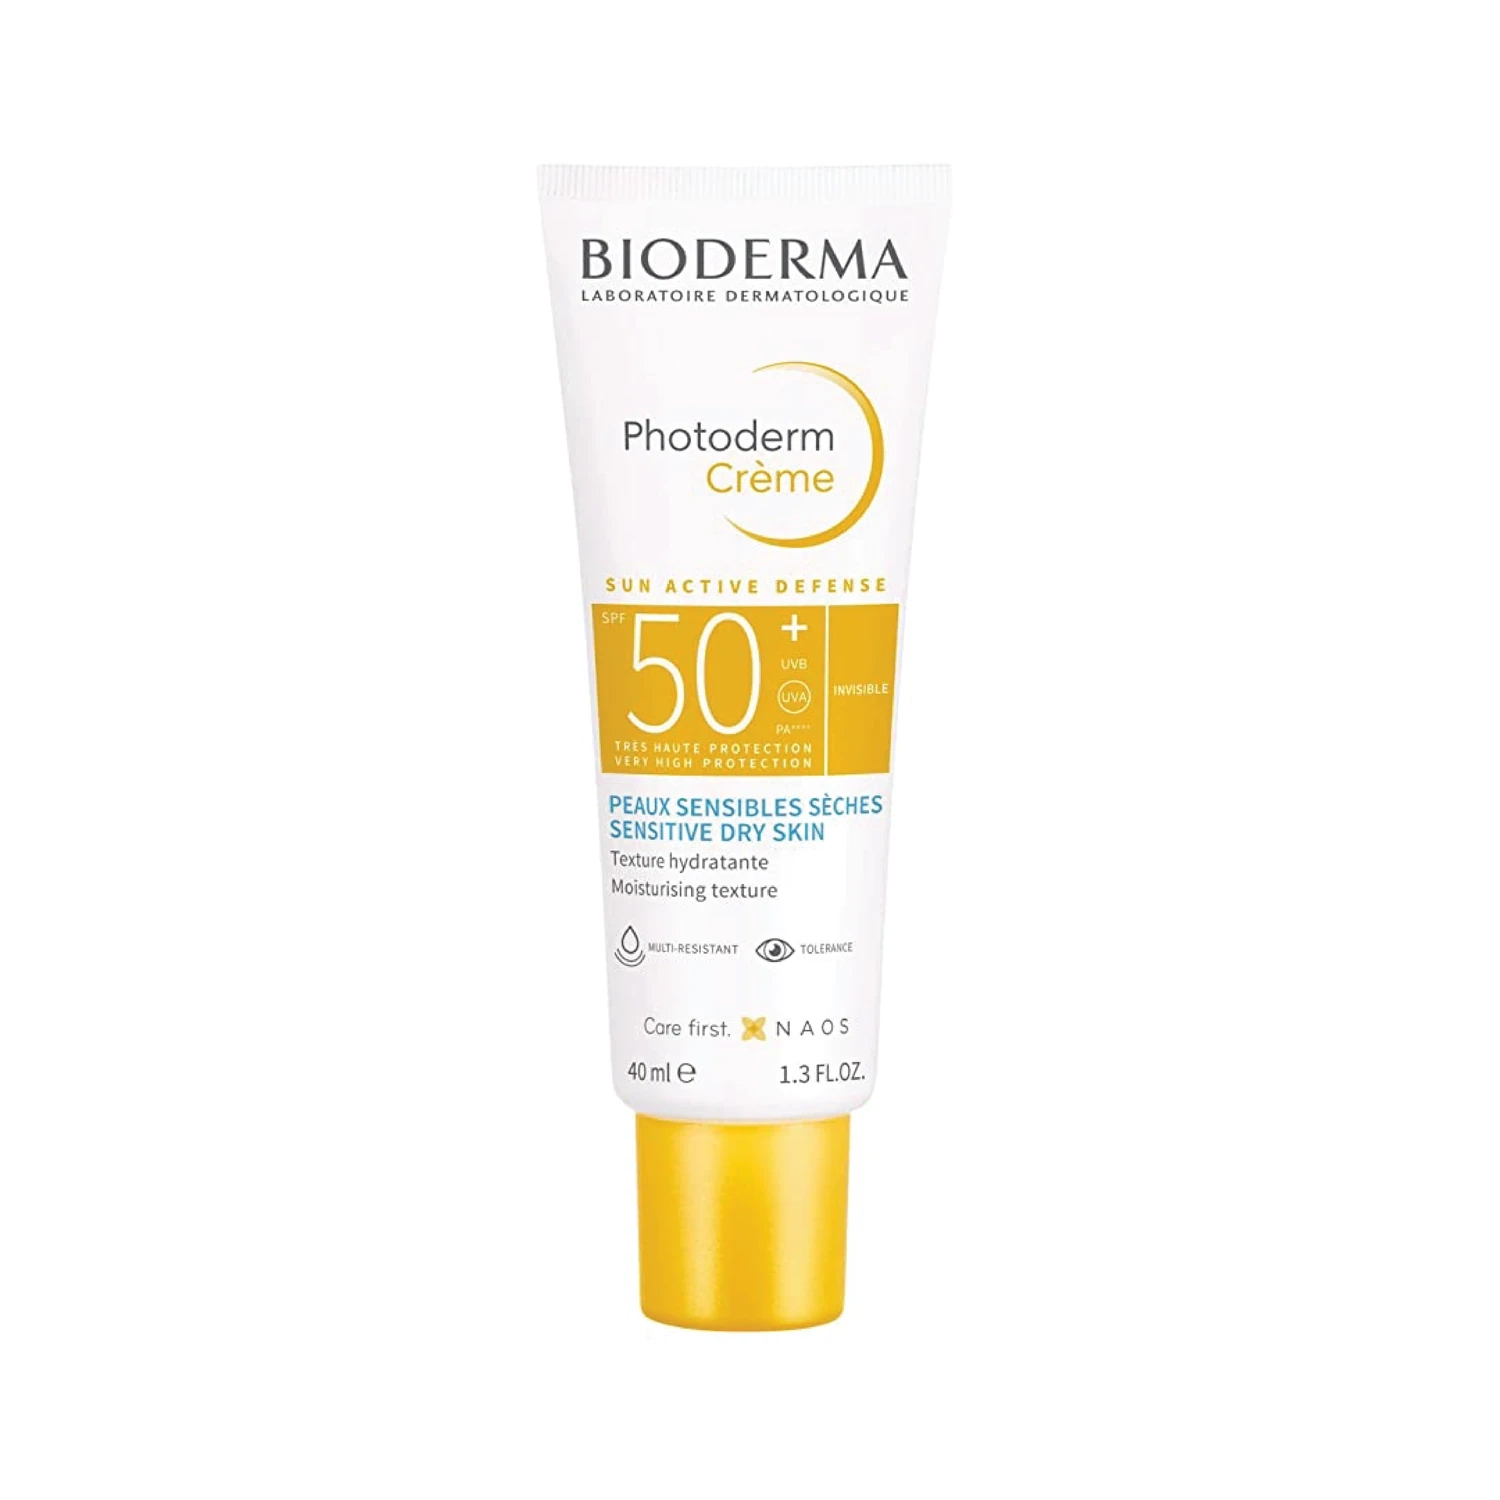 BIODERMA - Photoderm Crème SPF50+ - Sensitive Dry Skin